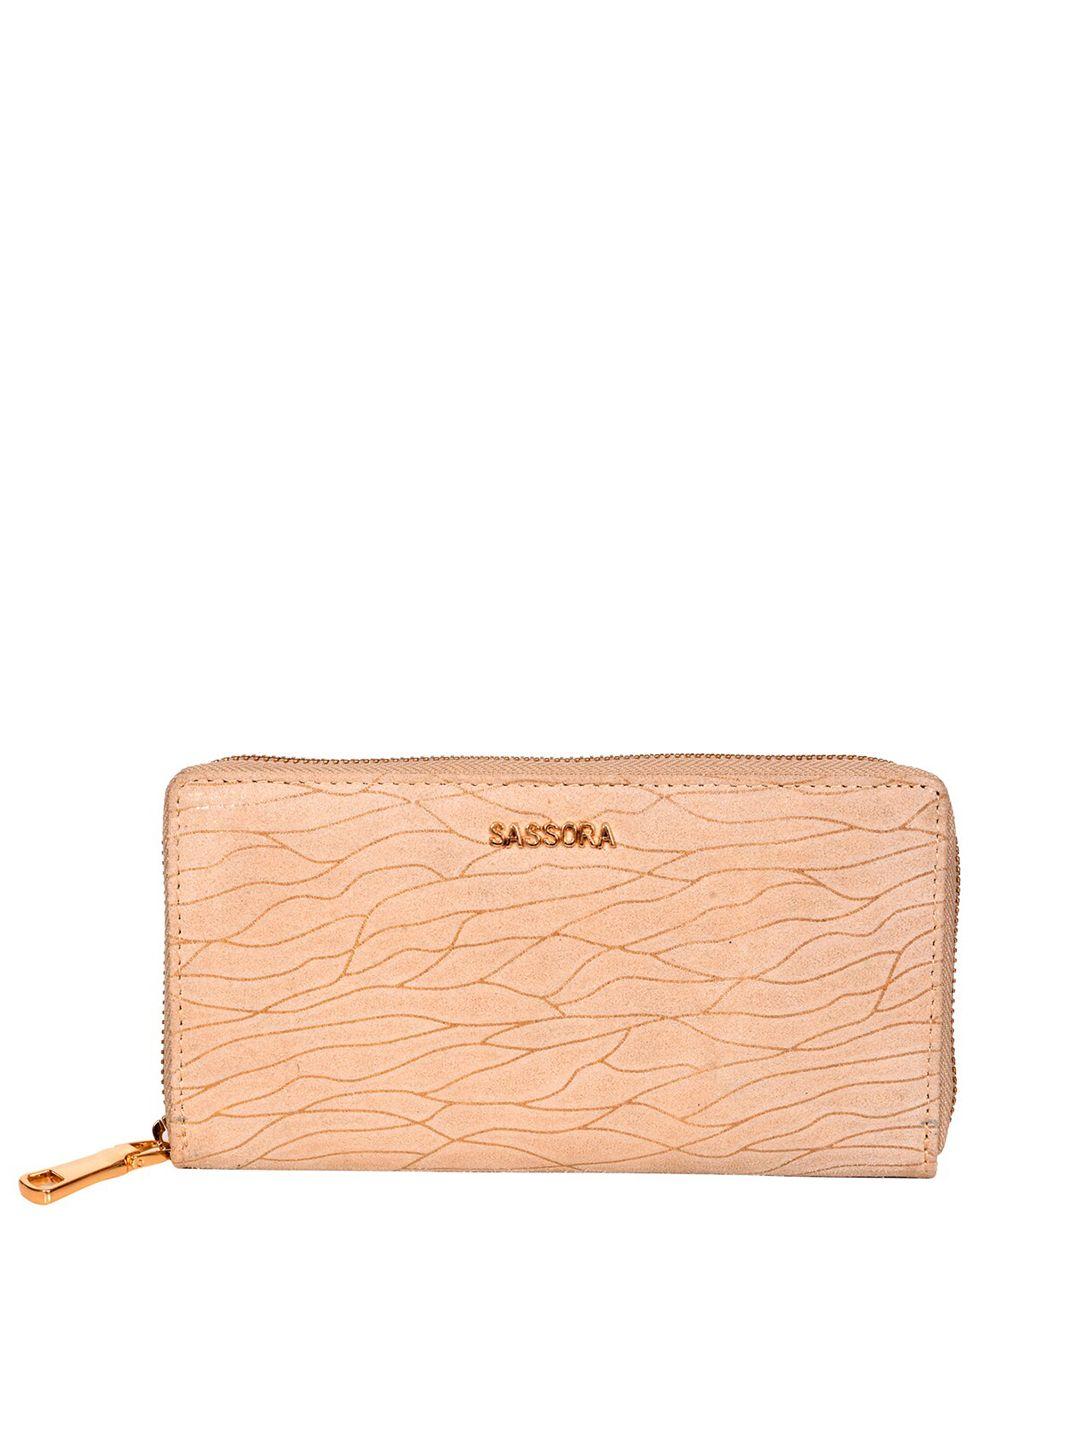 sassora women beige abstract printed leather zip around wallet